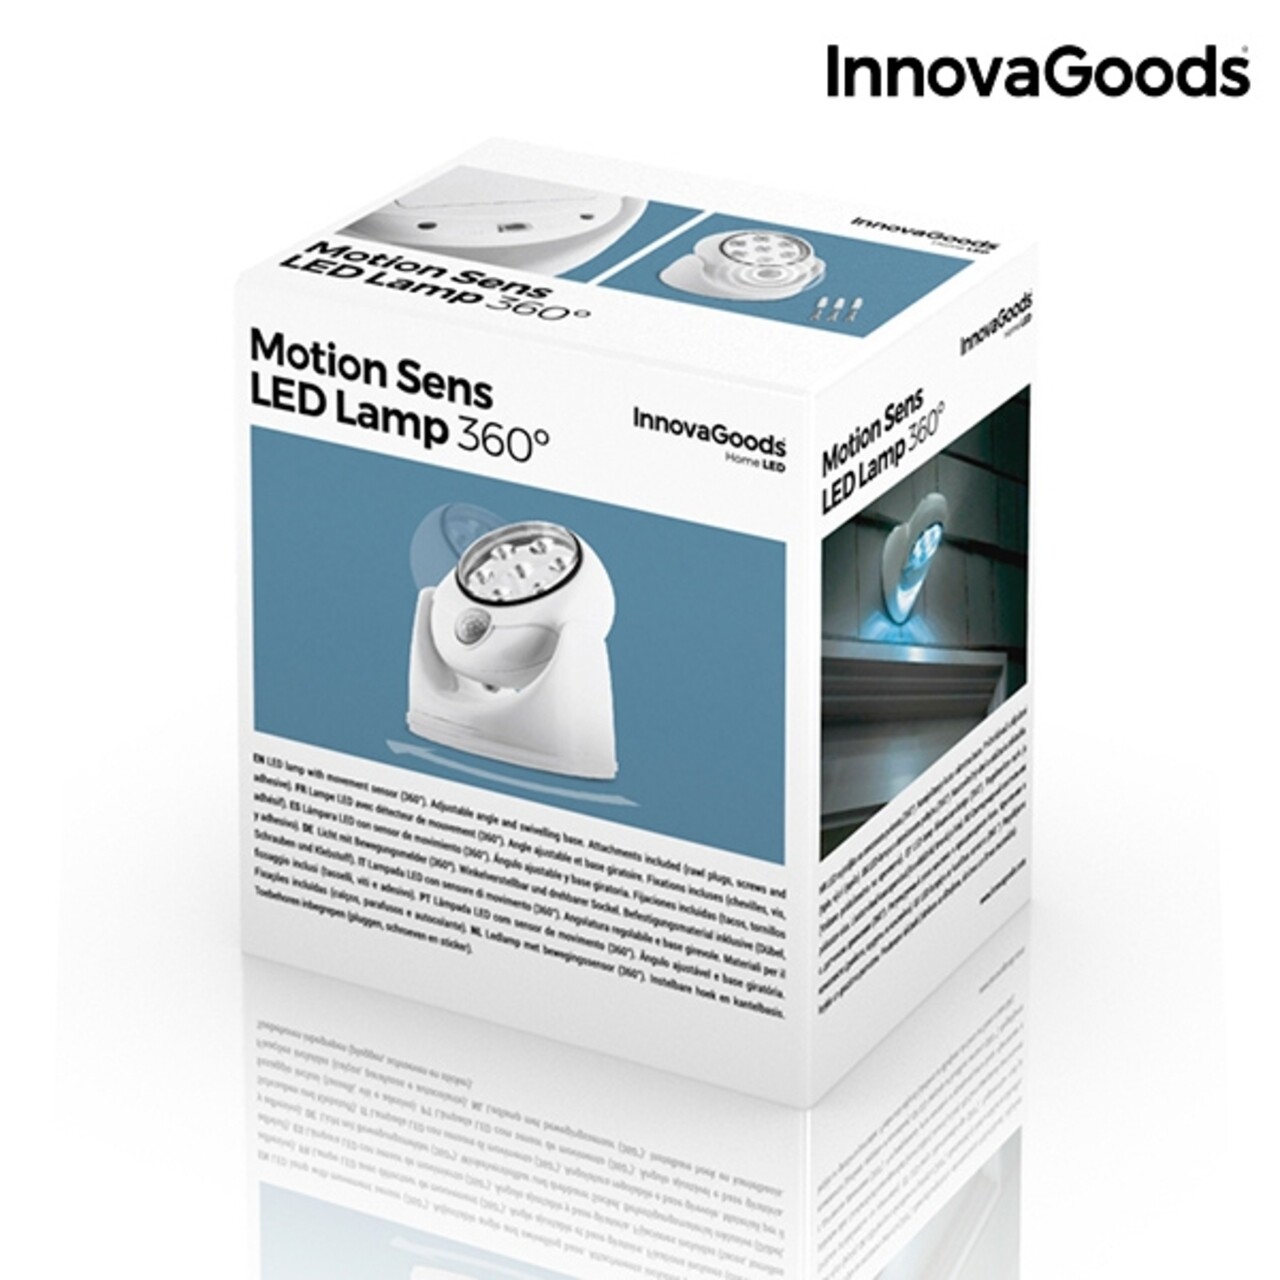 Lampa LED cu senzor de miscare InnovaGoods, rotire 360º